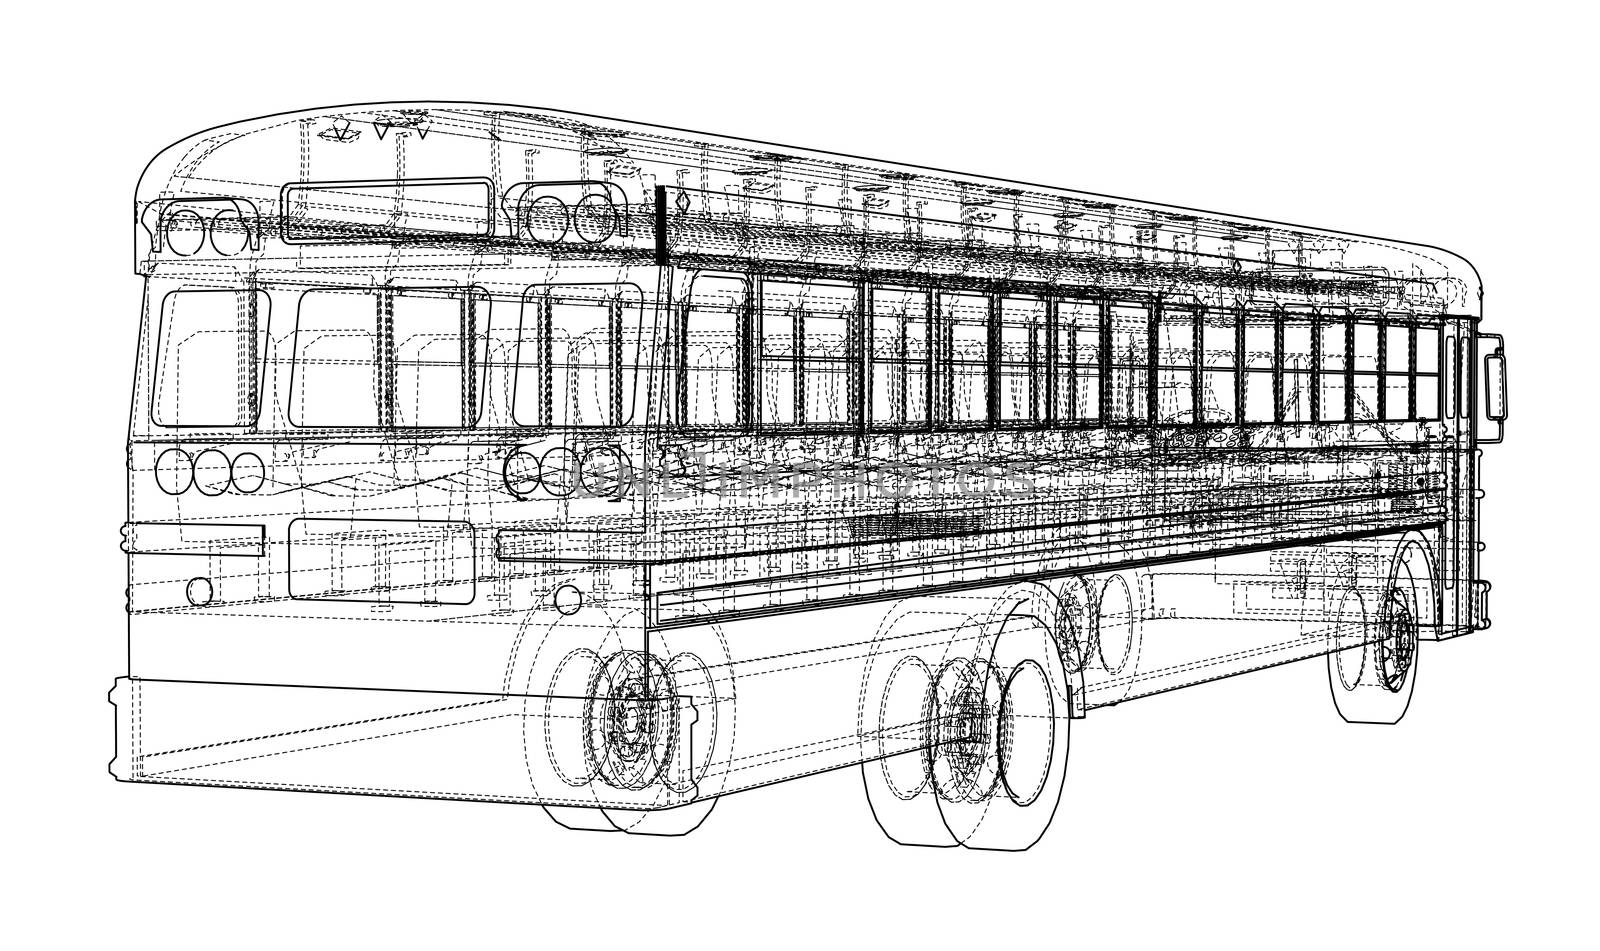 School bus outline. 3d illustration. Transportation concept